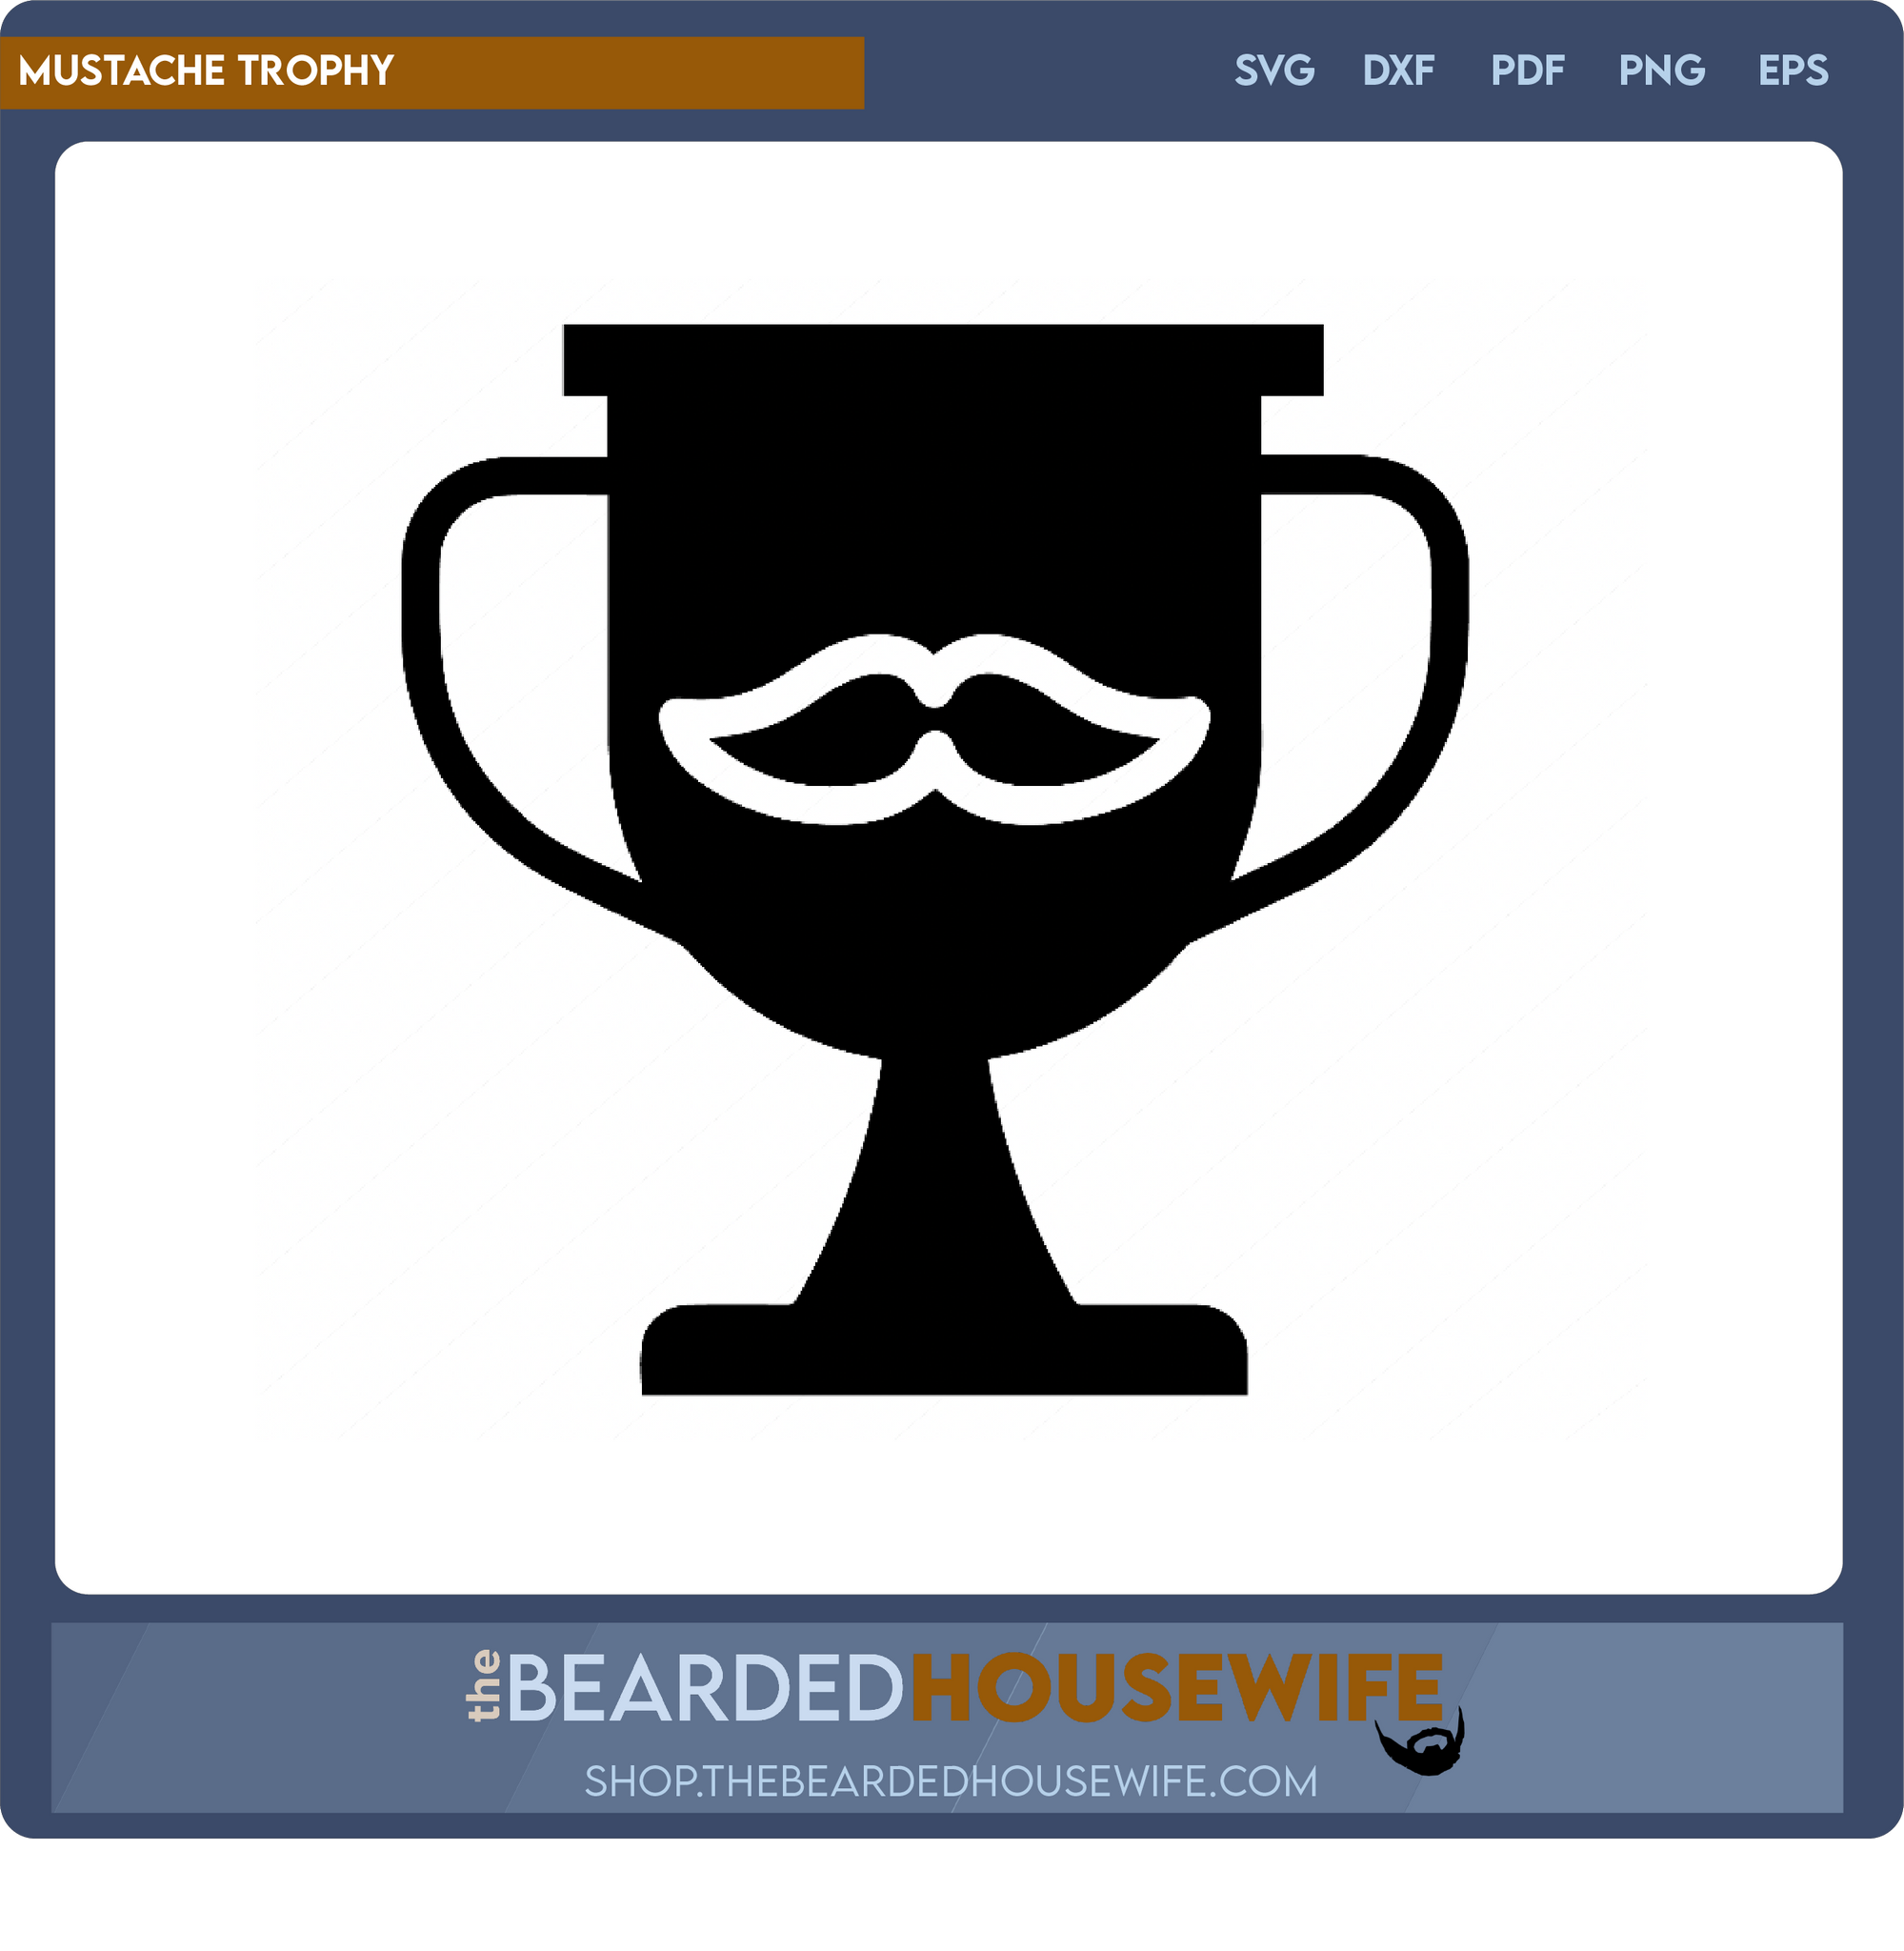 Mustache Trophy